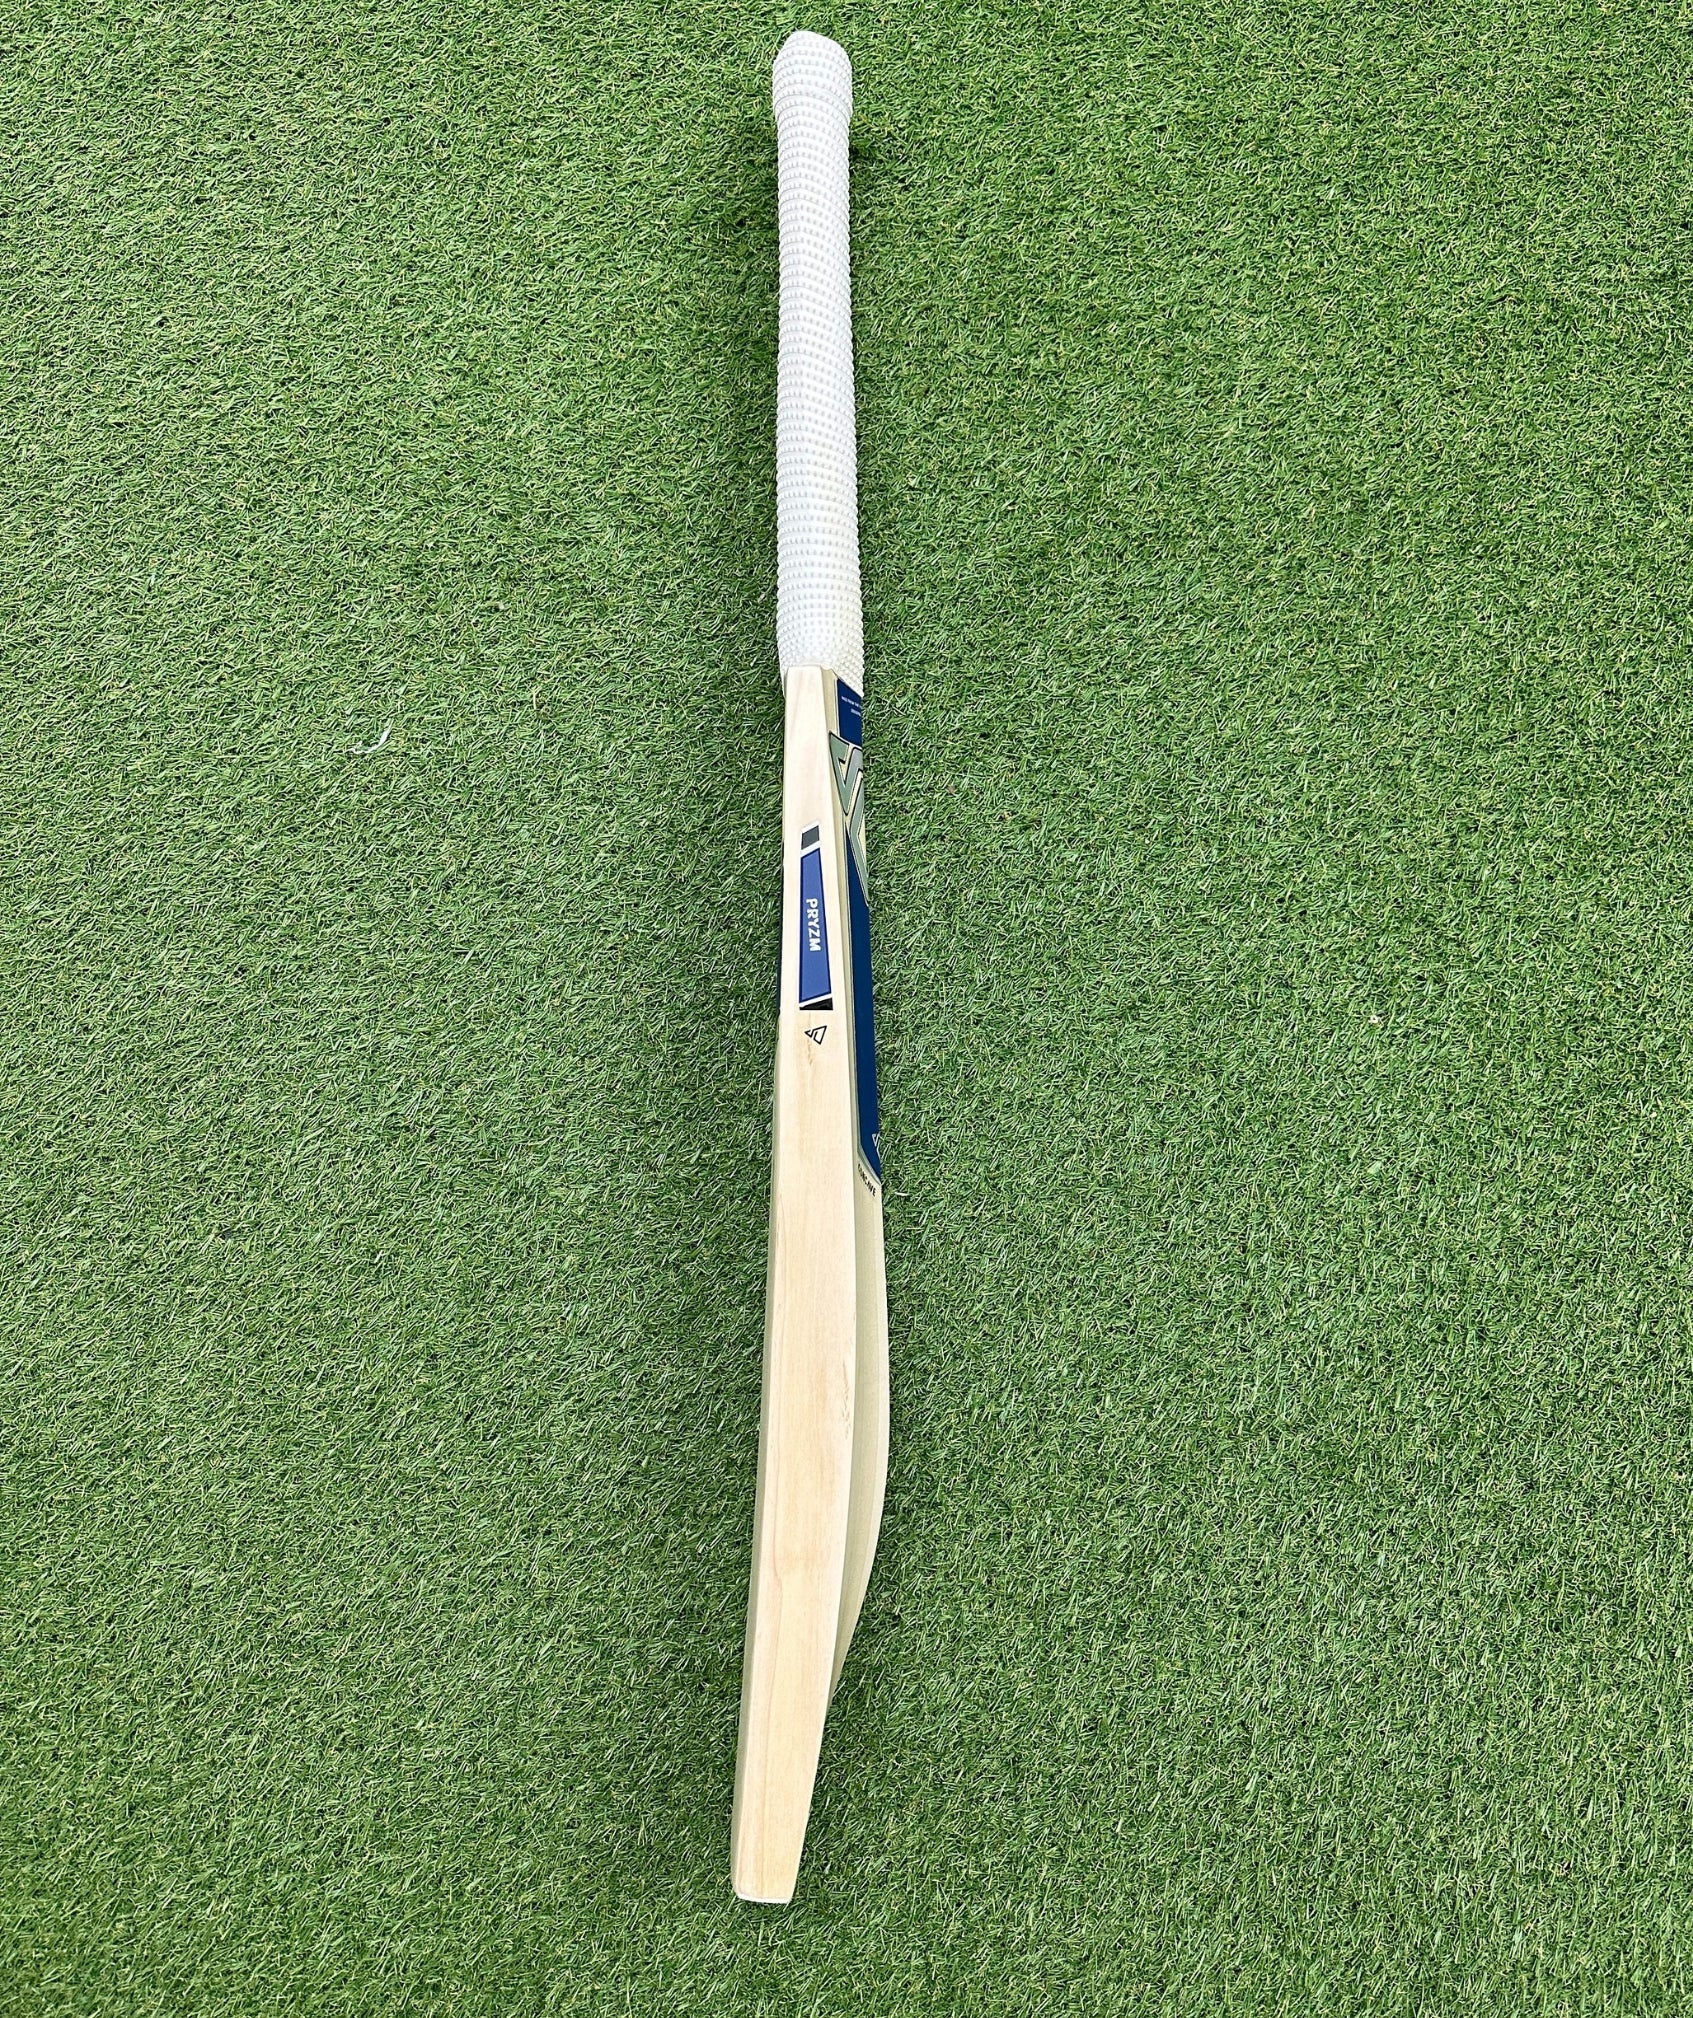 2'10 Concave | Exclusive Pro Cricket Bat #3309